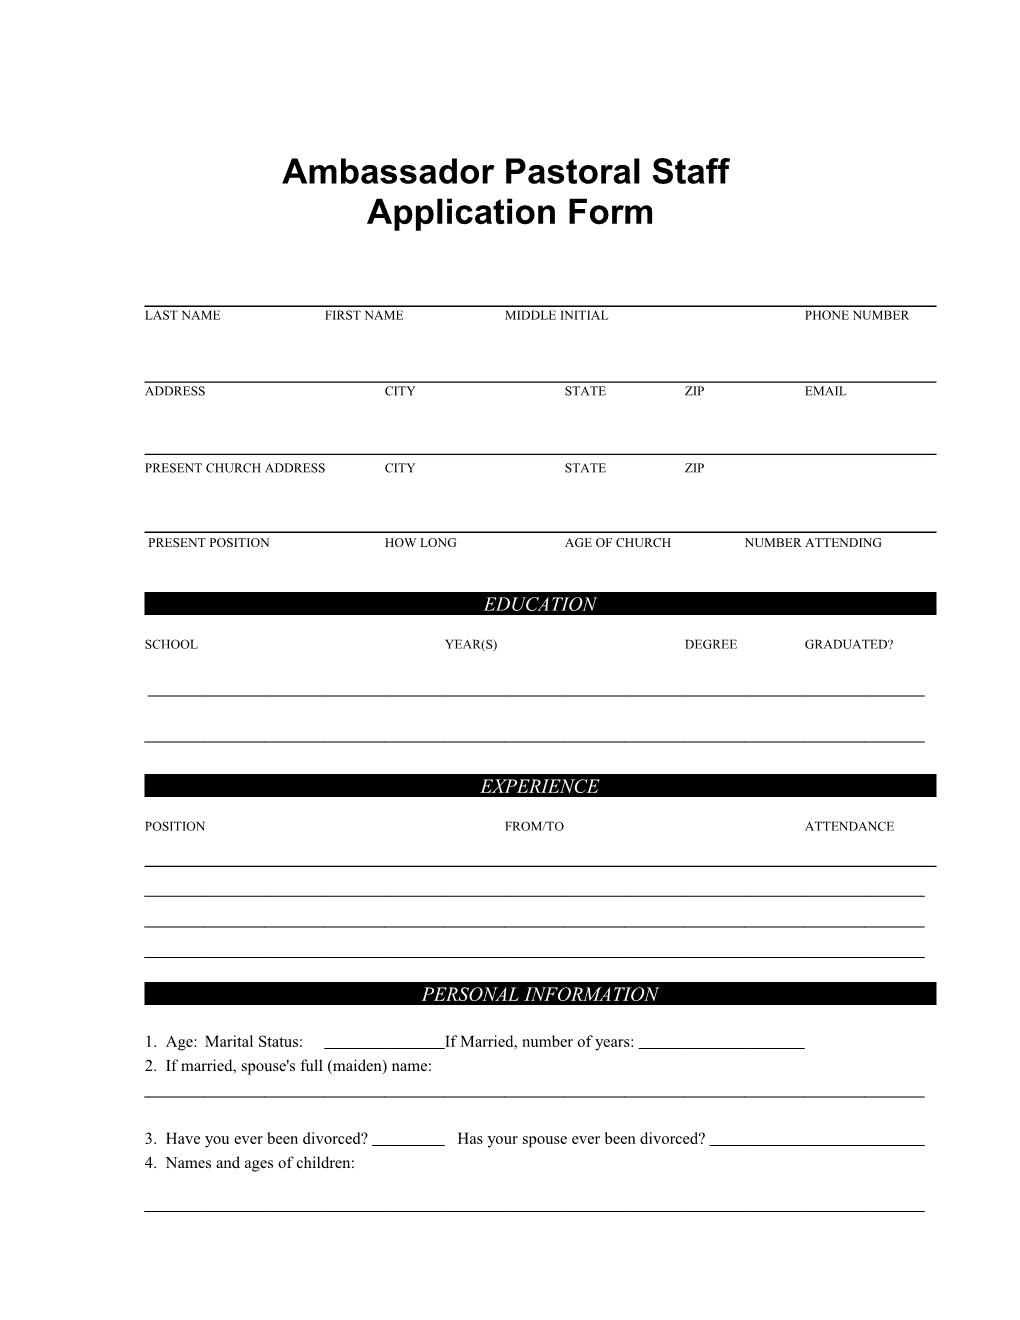 Ambassador Pastoral Staff Application Form